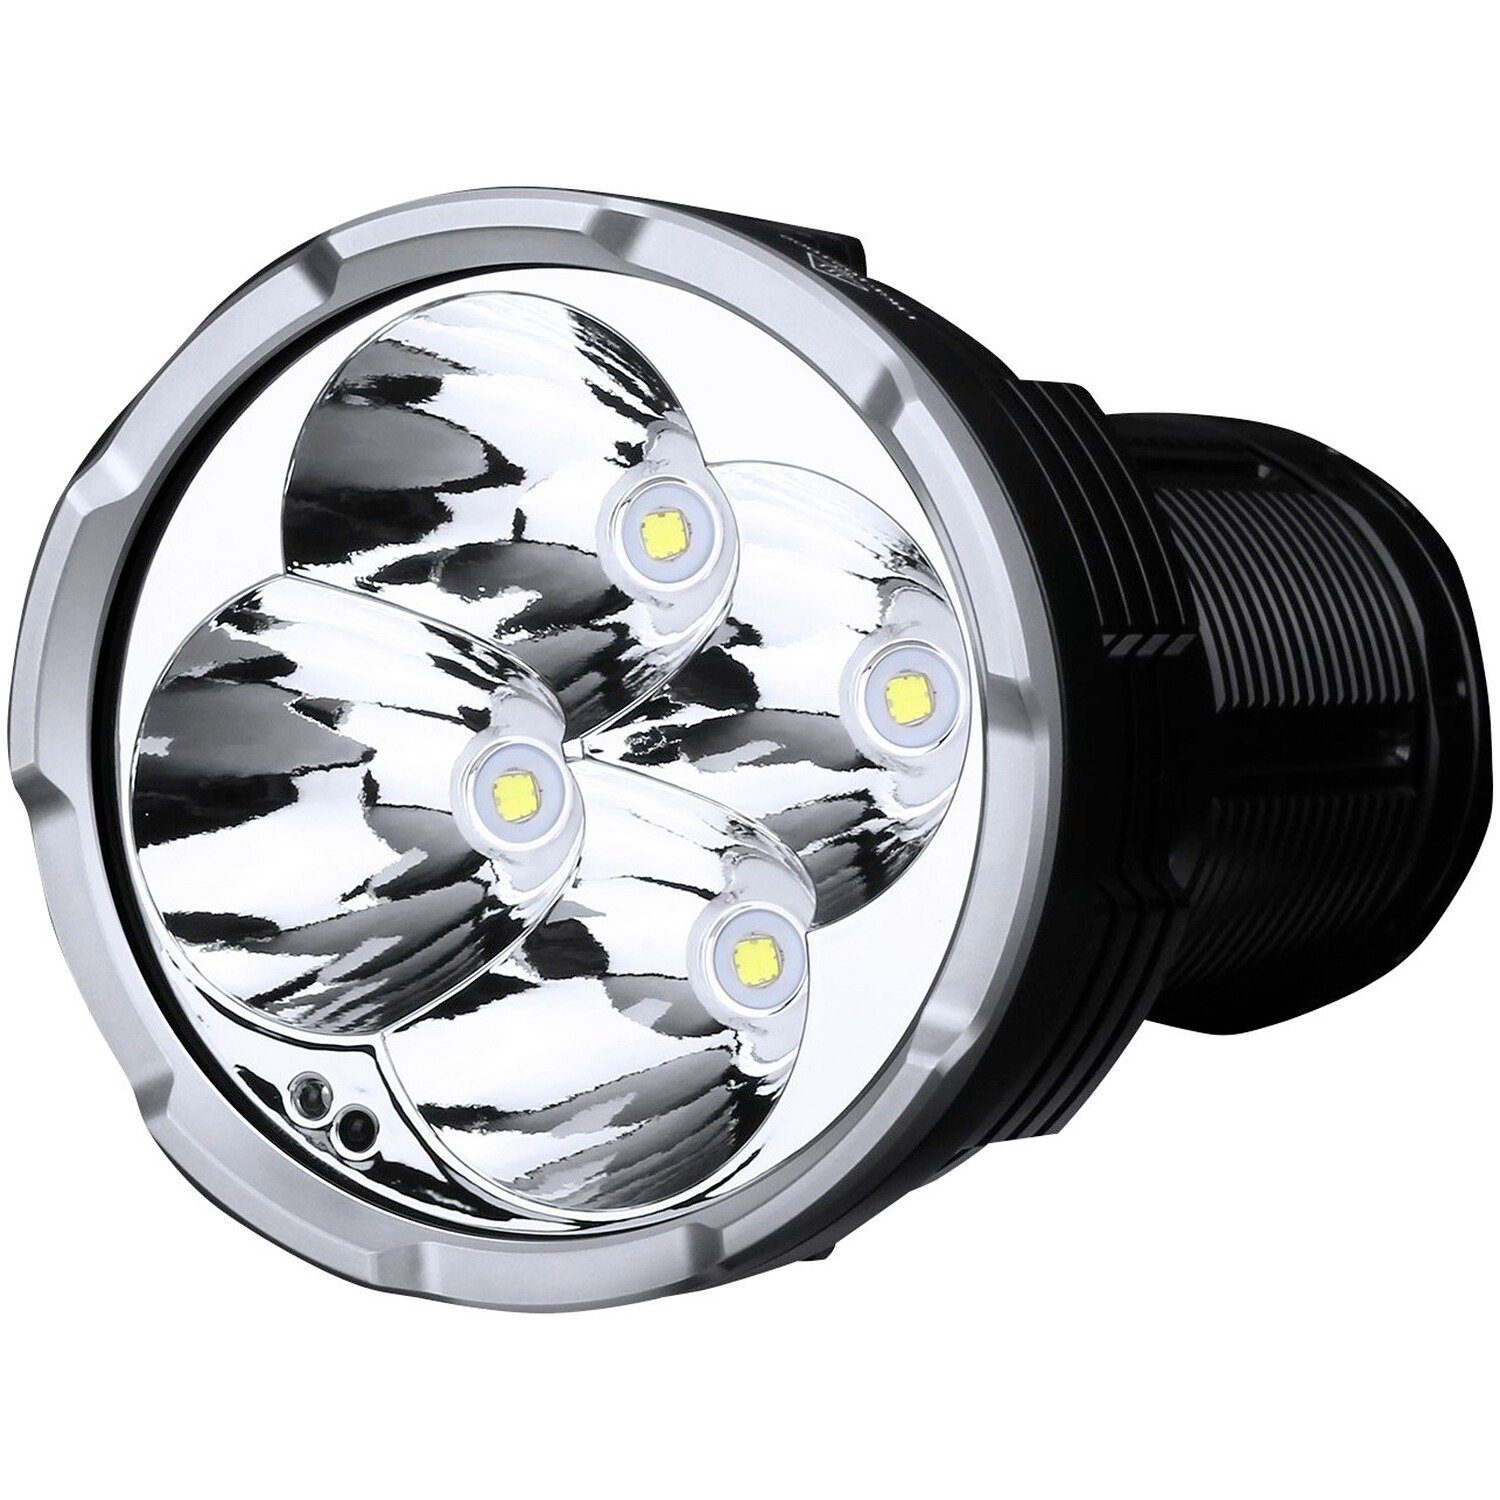 Lampe Taschenlampe Fenix LR50R